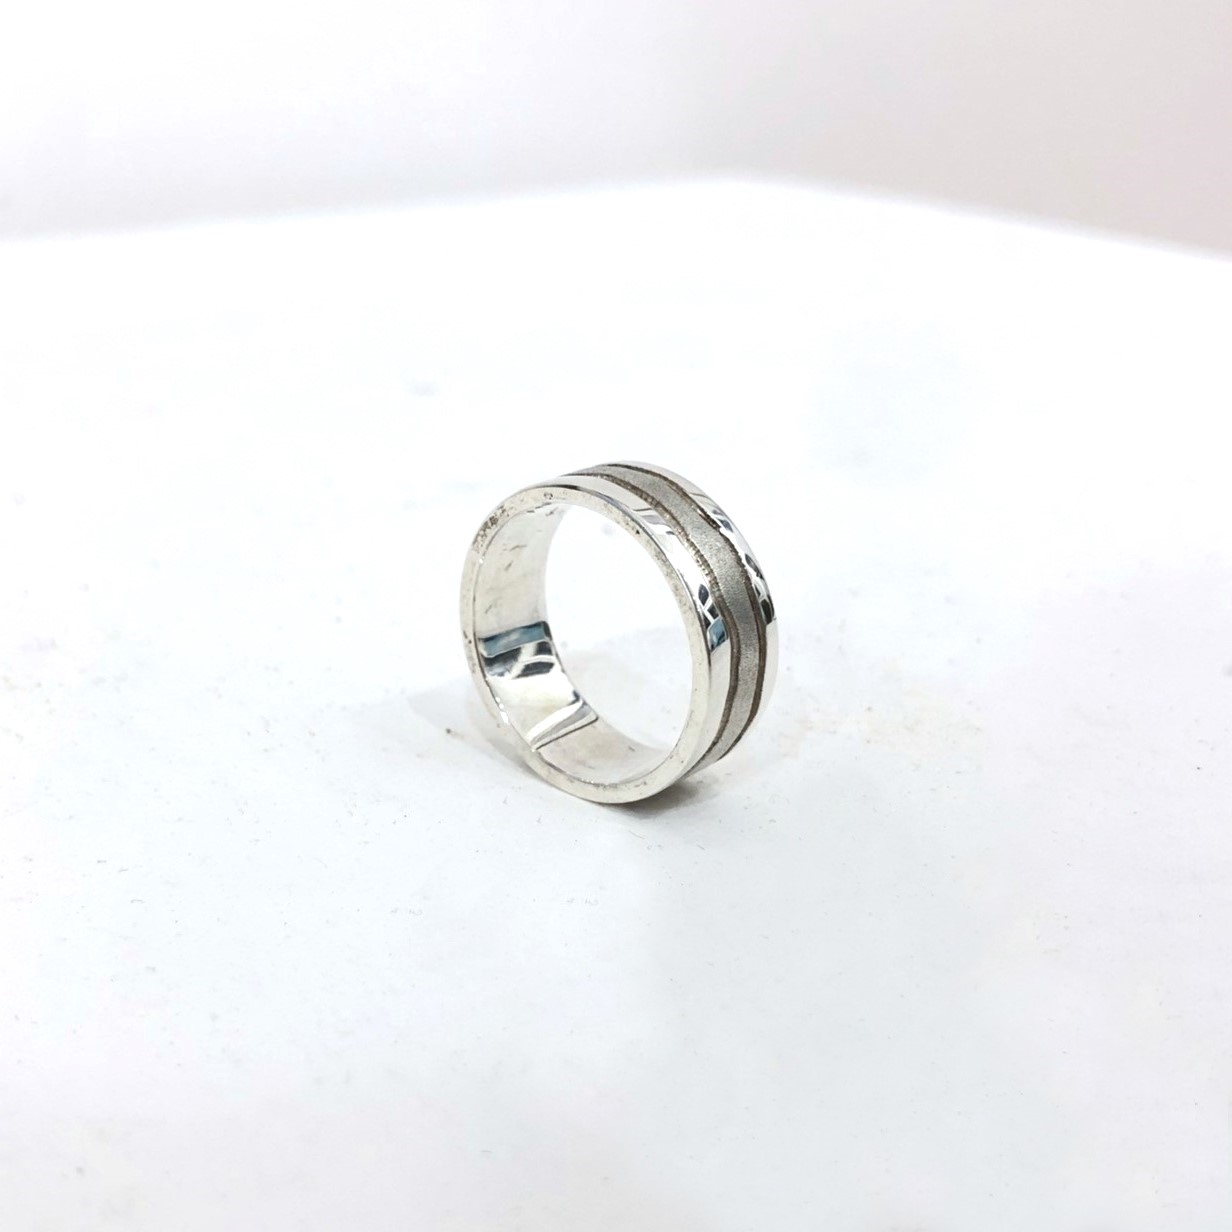 'Arran Texture Ring | Sterling Silver' by artist Jen Cunningham